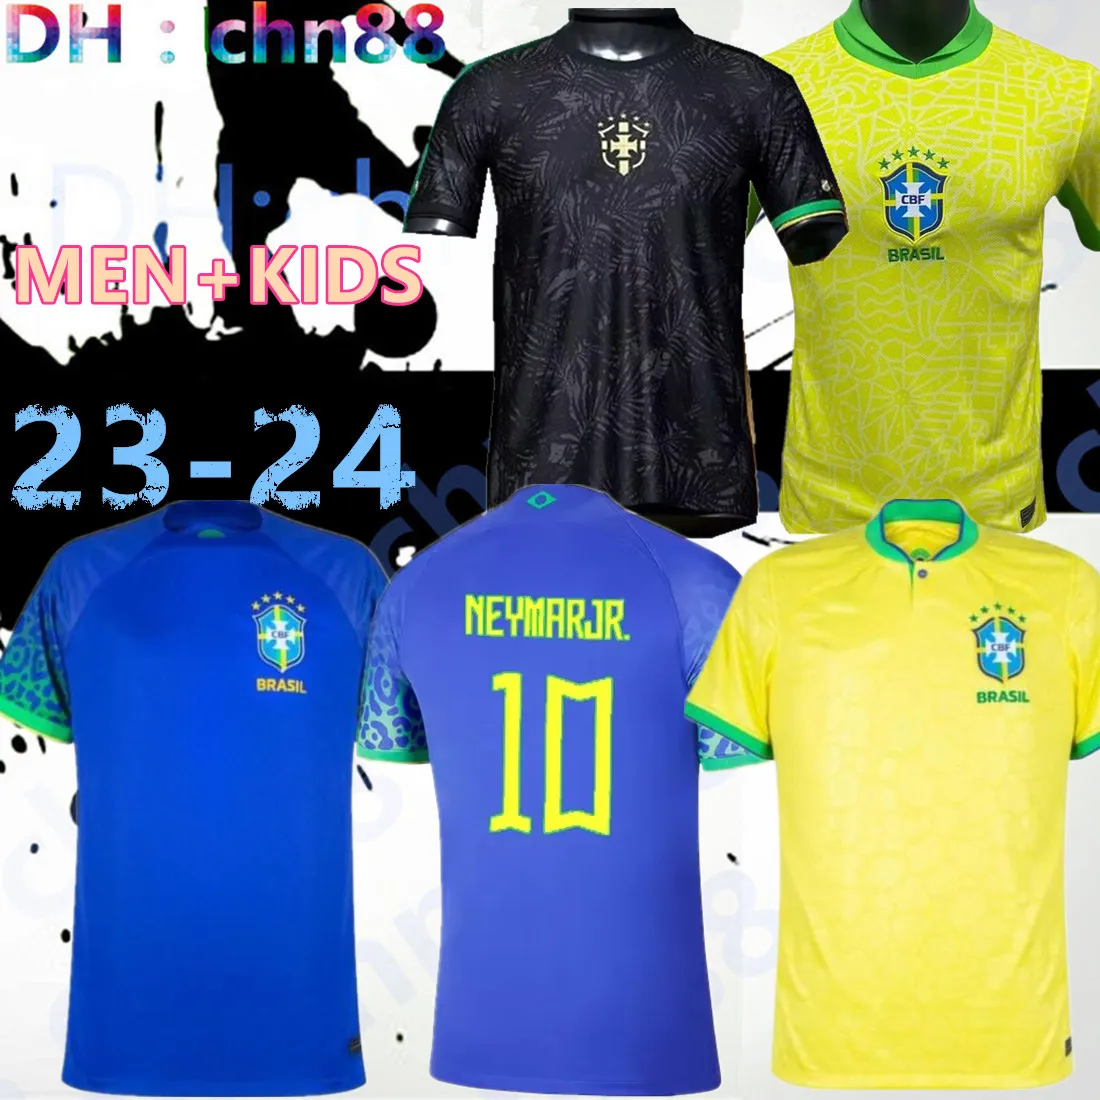 22 23 24 Soccer Jerseys Paqueta Brazils 2023 2024 Bruno G. Coutinho Football Shirt Jesus Marcelo Pele Casemiro Brasil Maillots Vini Jr Camisas de Futebol Mens Kids